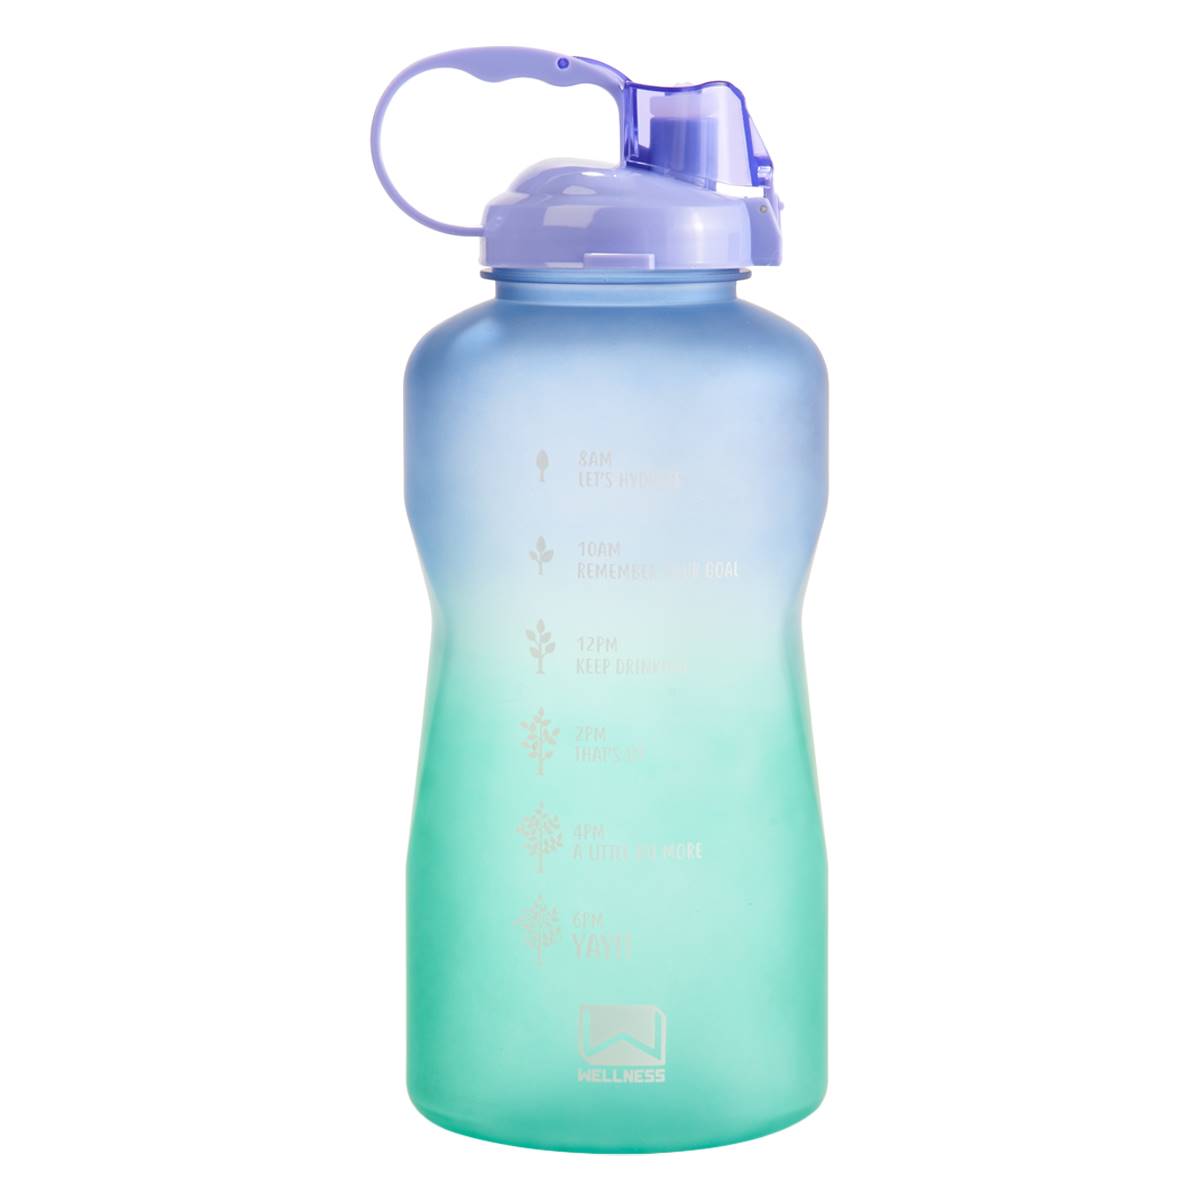 Wellness 1-Gallon Sports Bottle - Violet/Teal